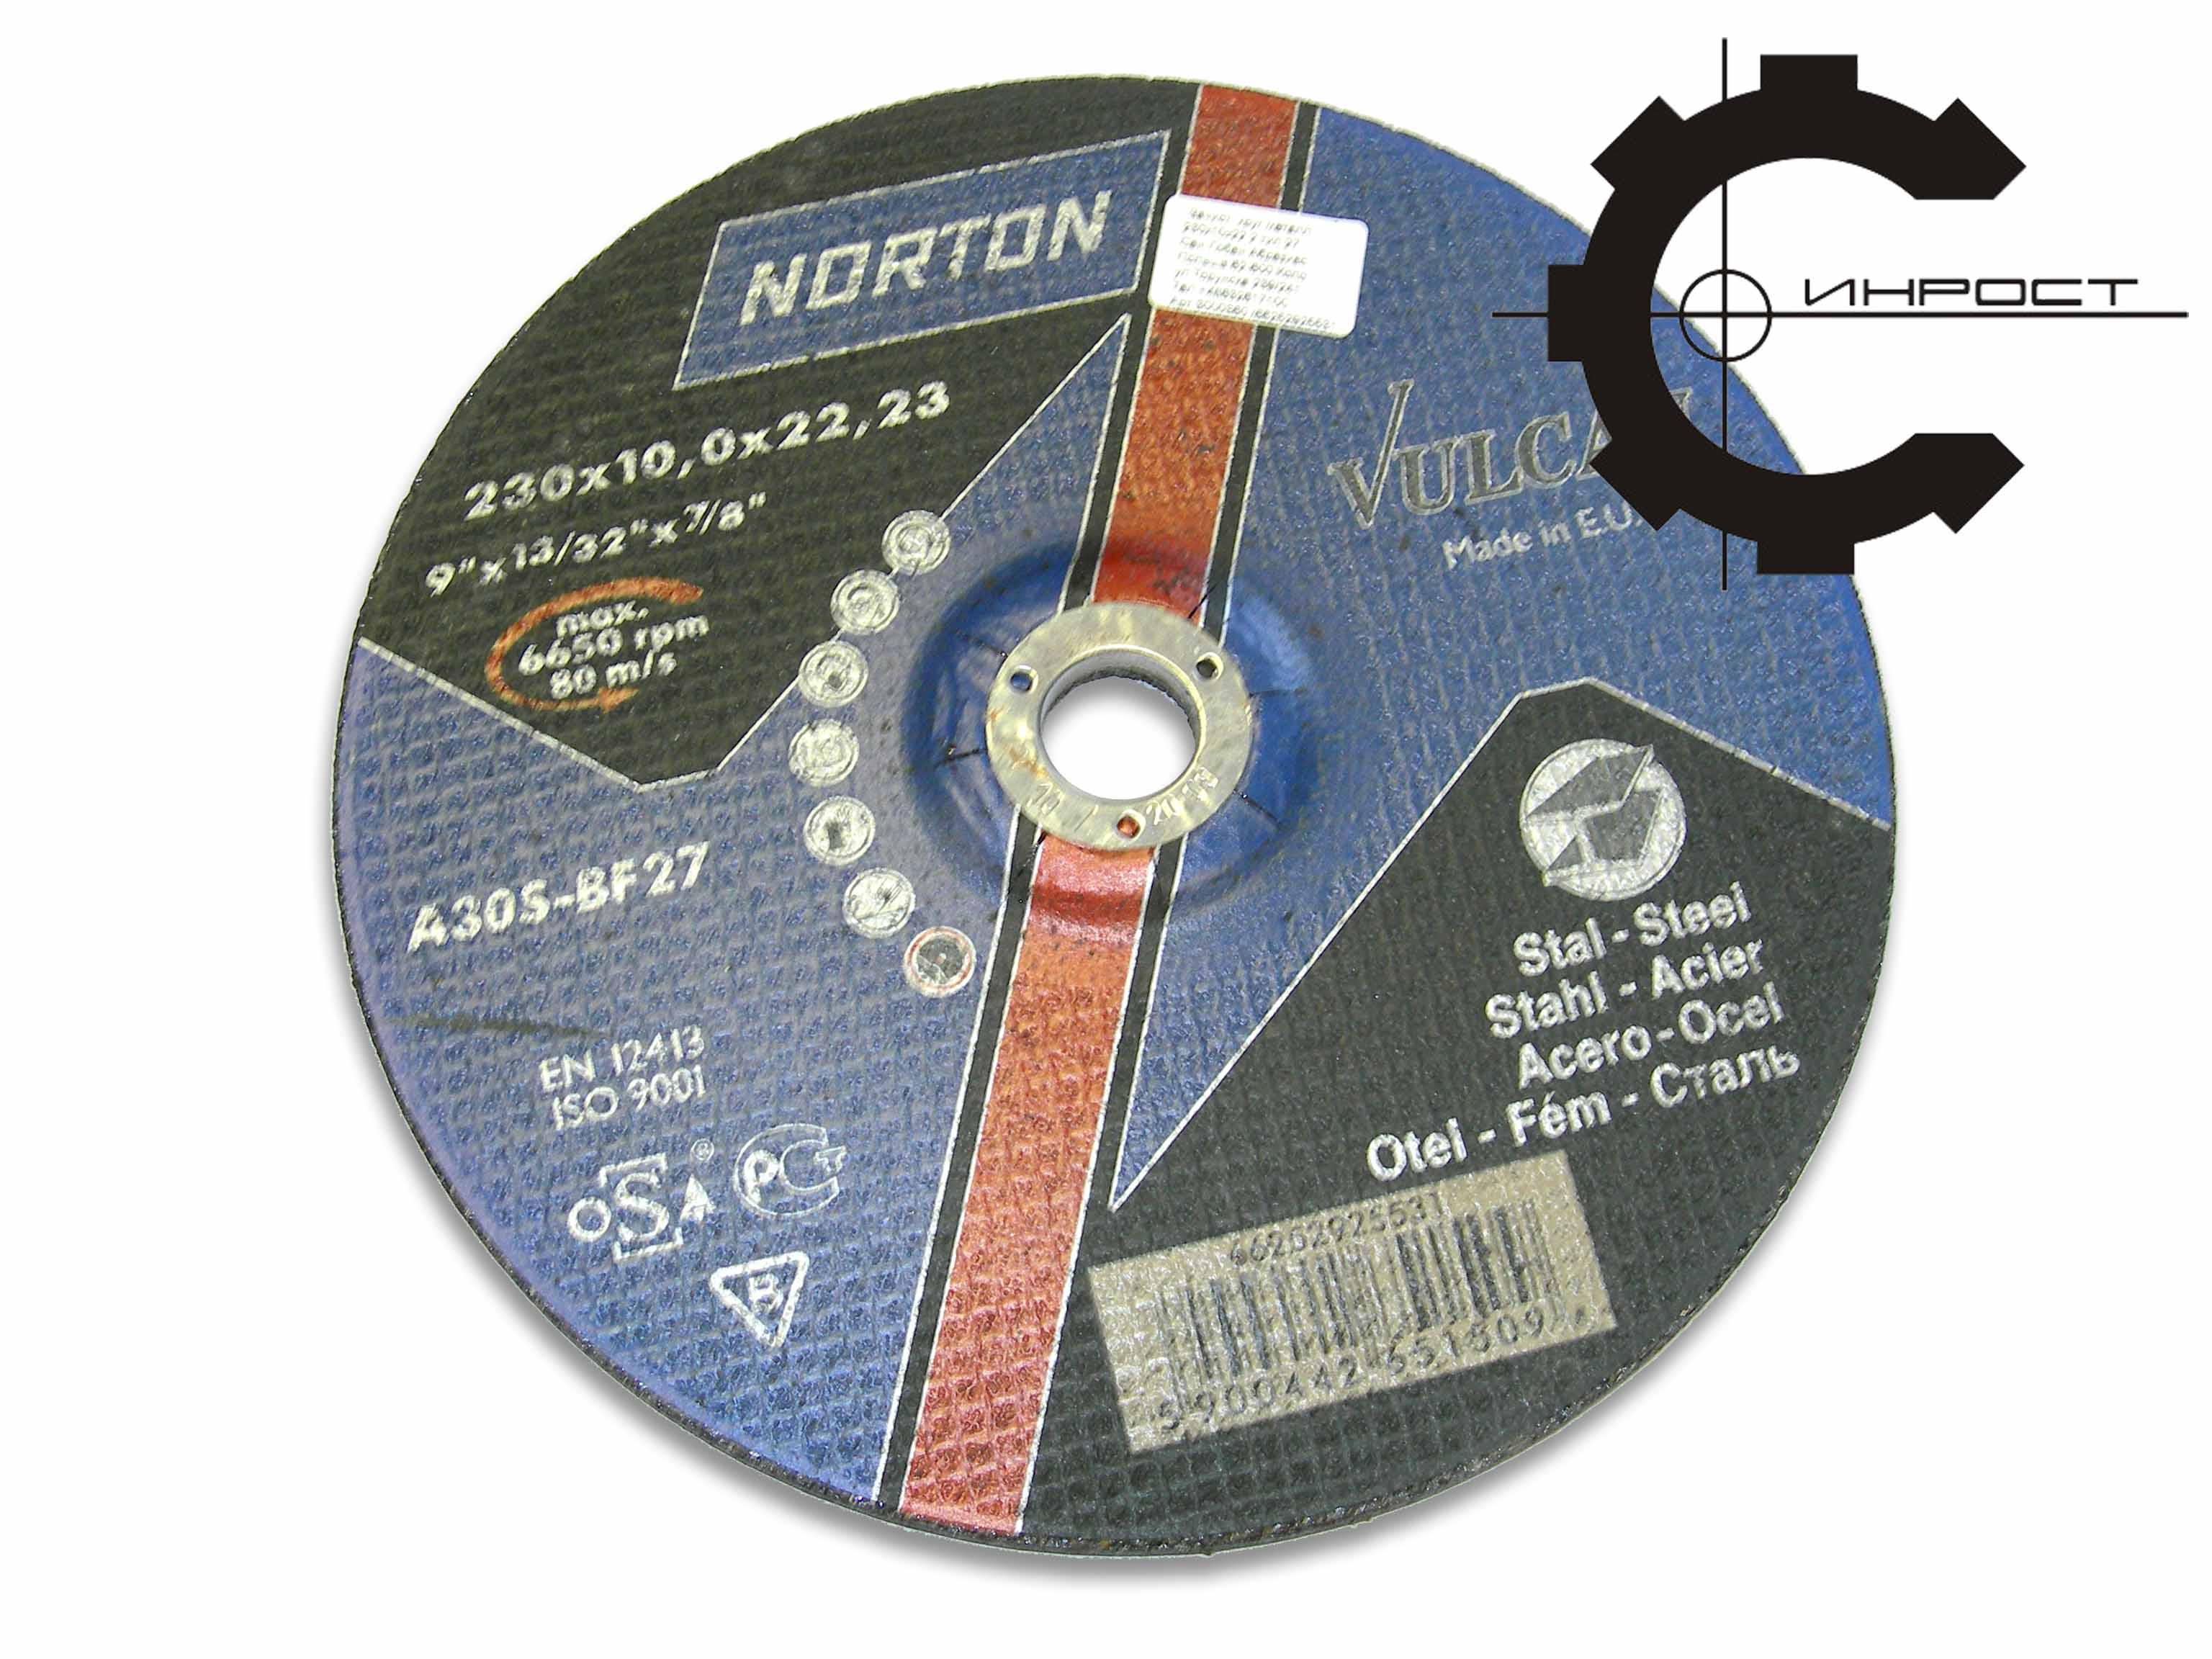   14 23010.022,2   27 (Norton-Vulcan)